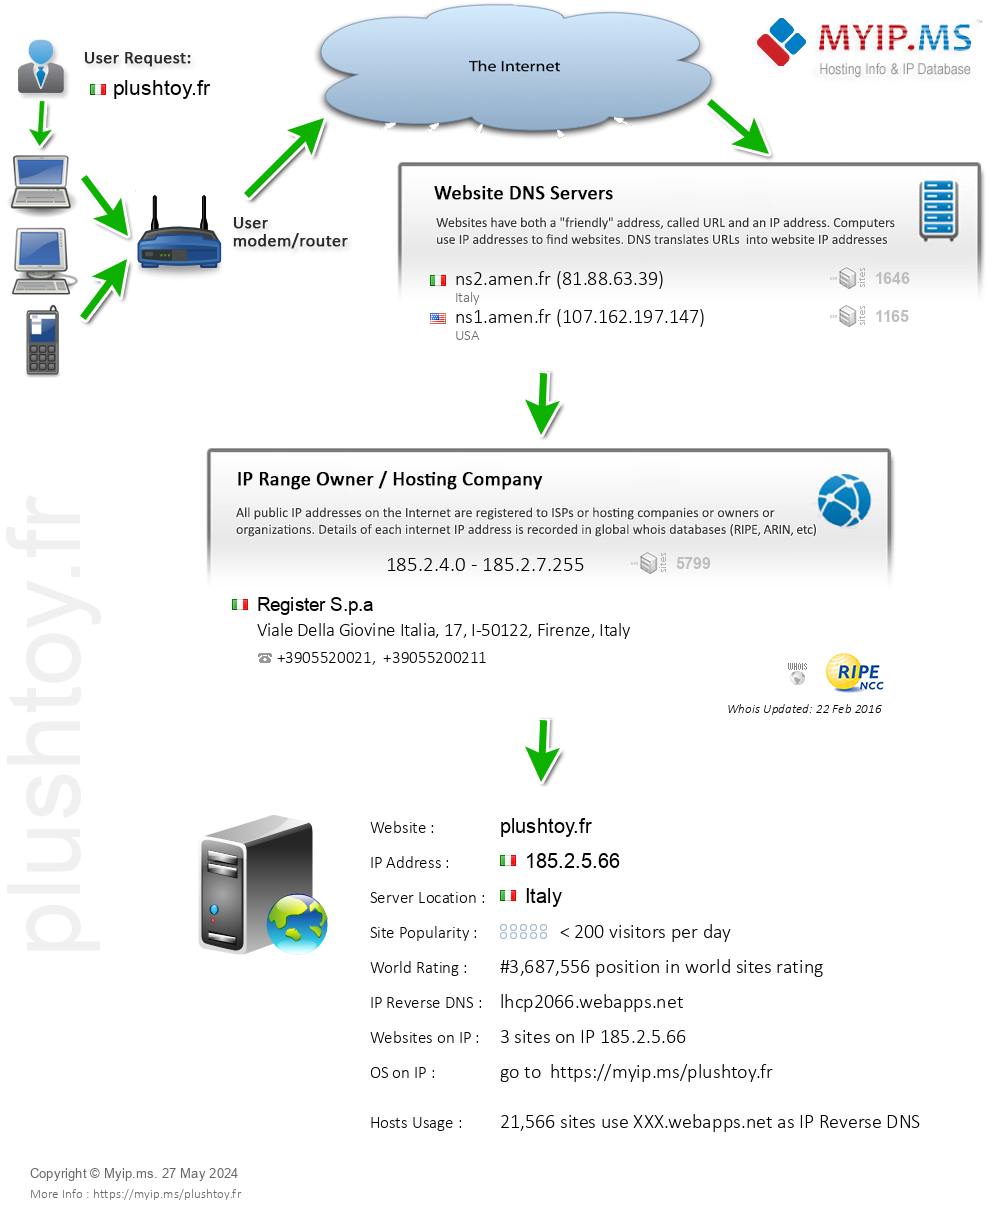 Plushtoy.fr - Website Hosting Visual IP Diagram